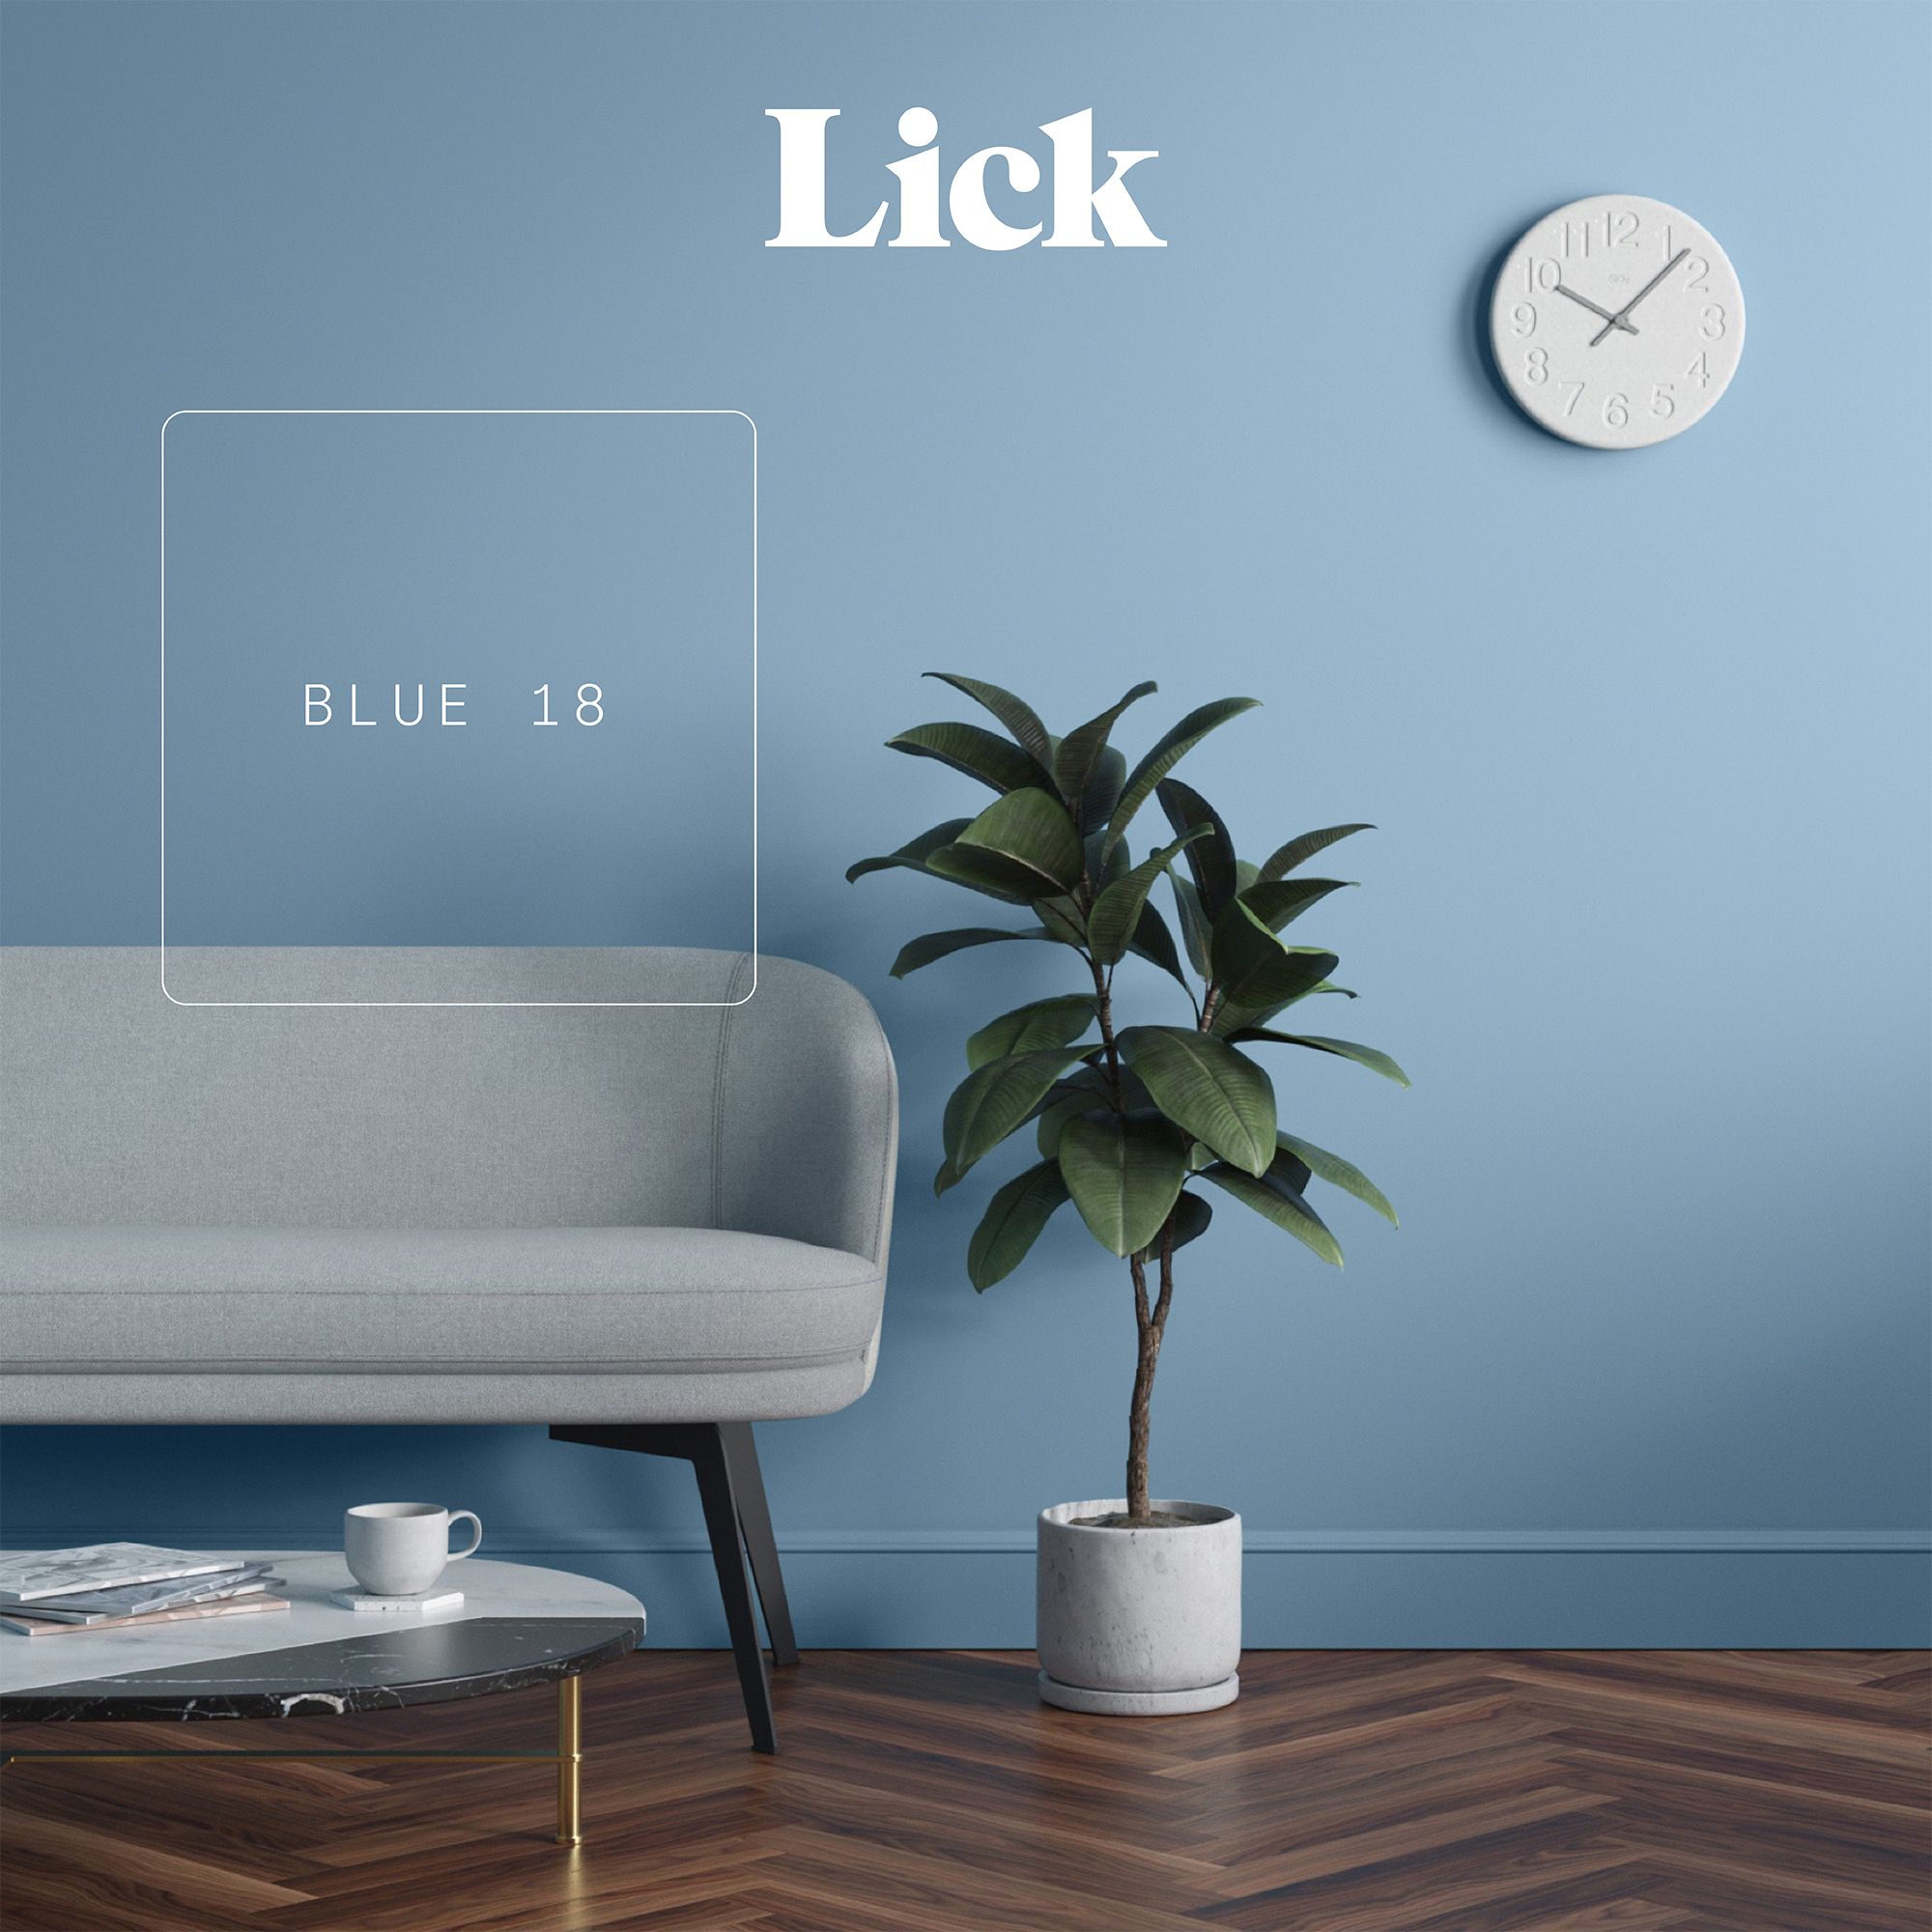 Lick Blue 18 Peel & stick Tester